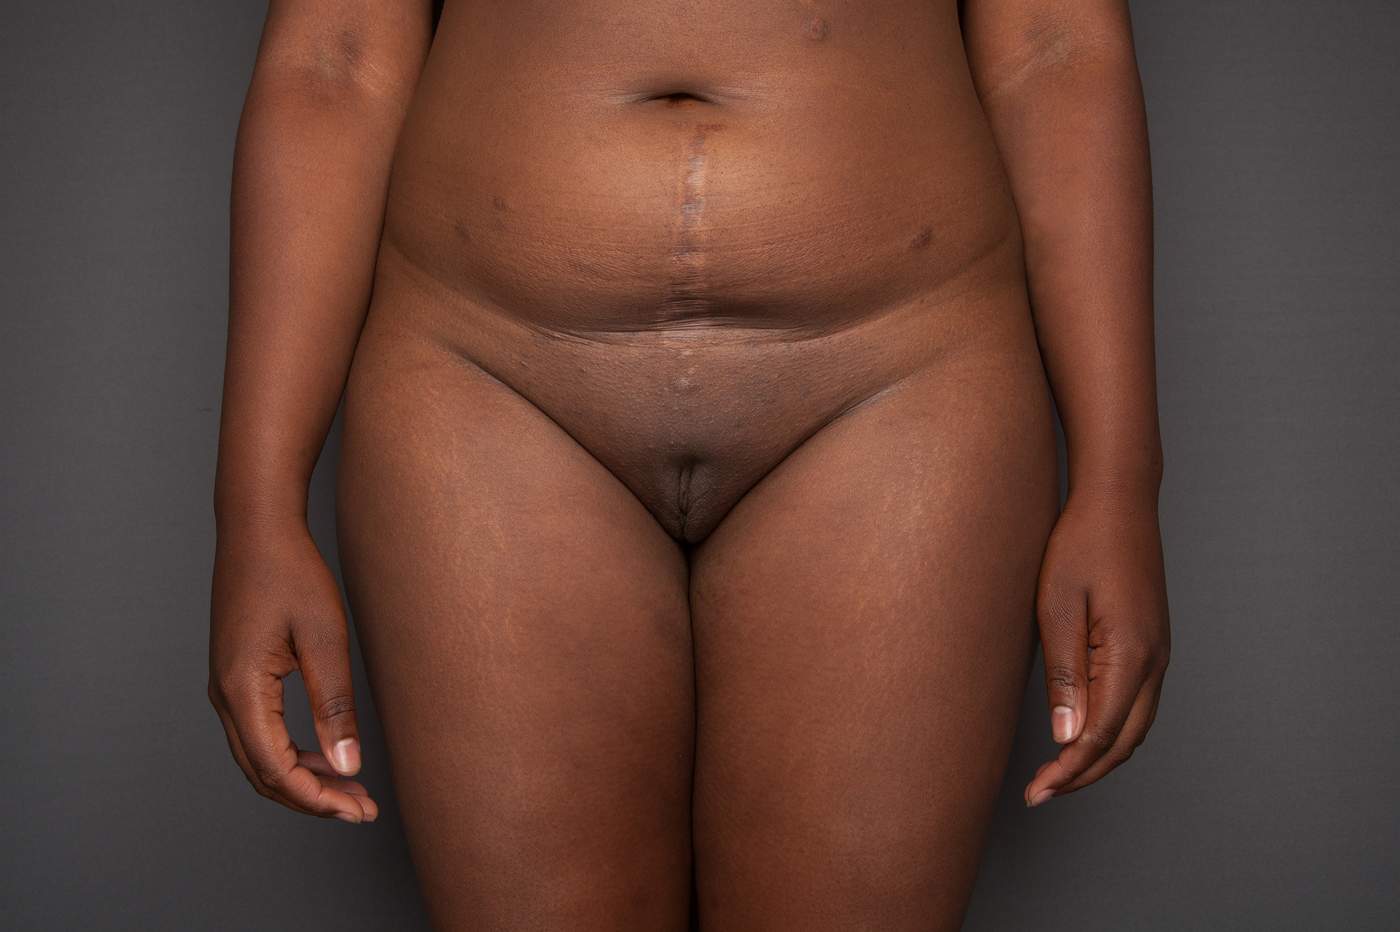 Female vulva labia photos